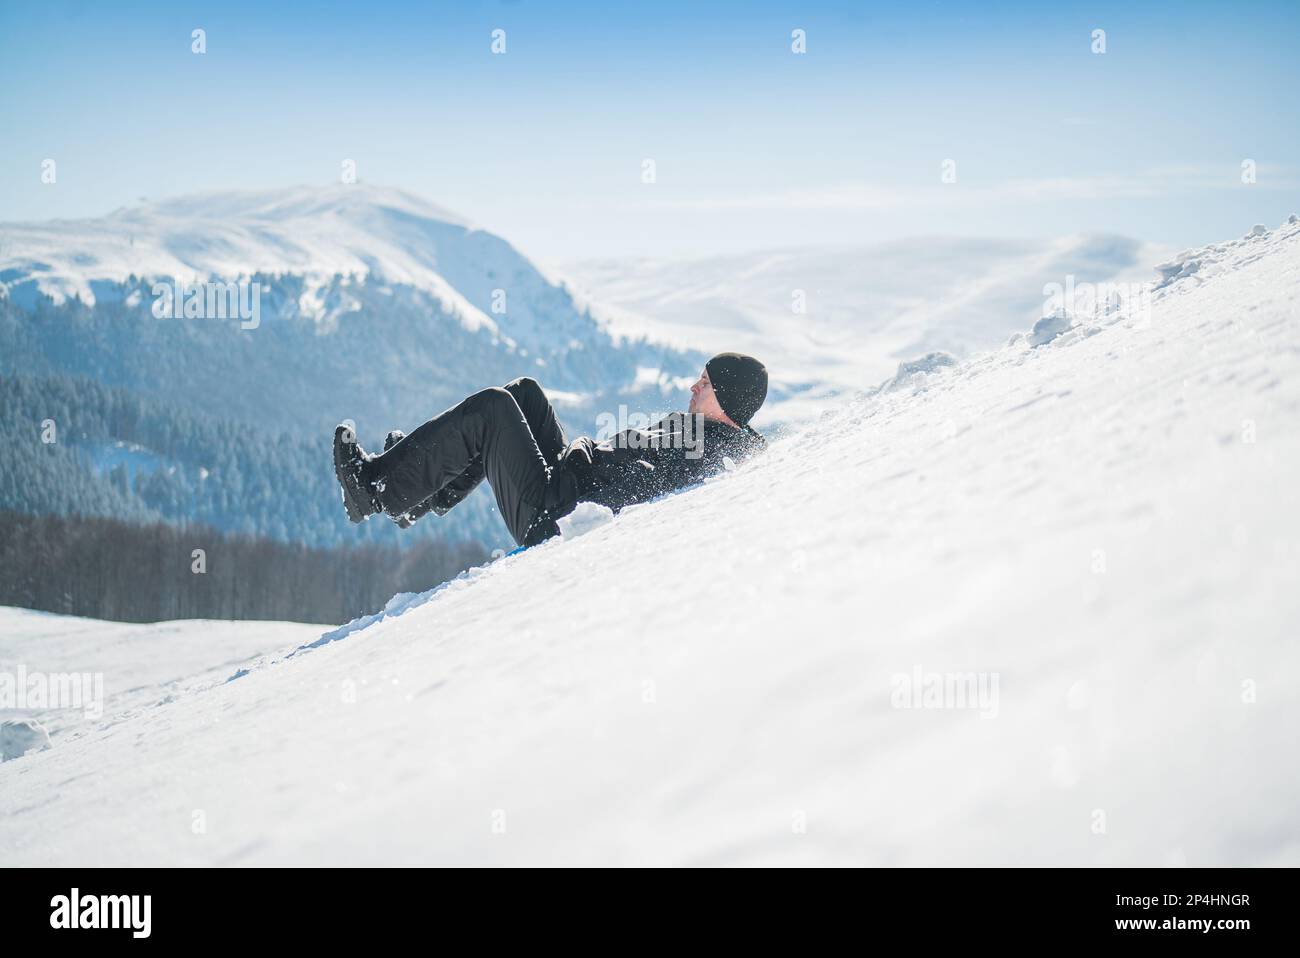 Man Sliding on Steep Slope in the Mountain Stock Photo - Alamy